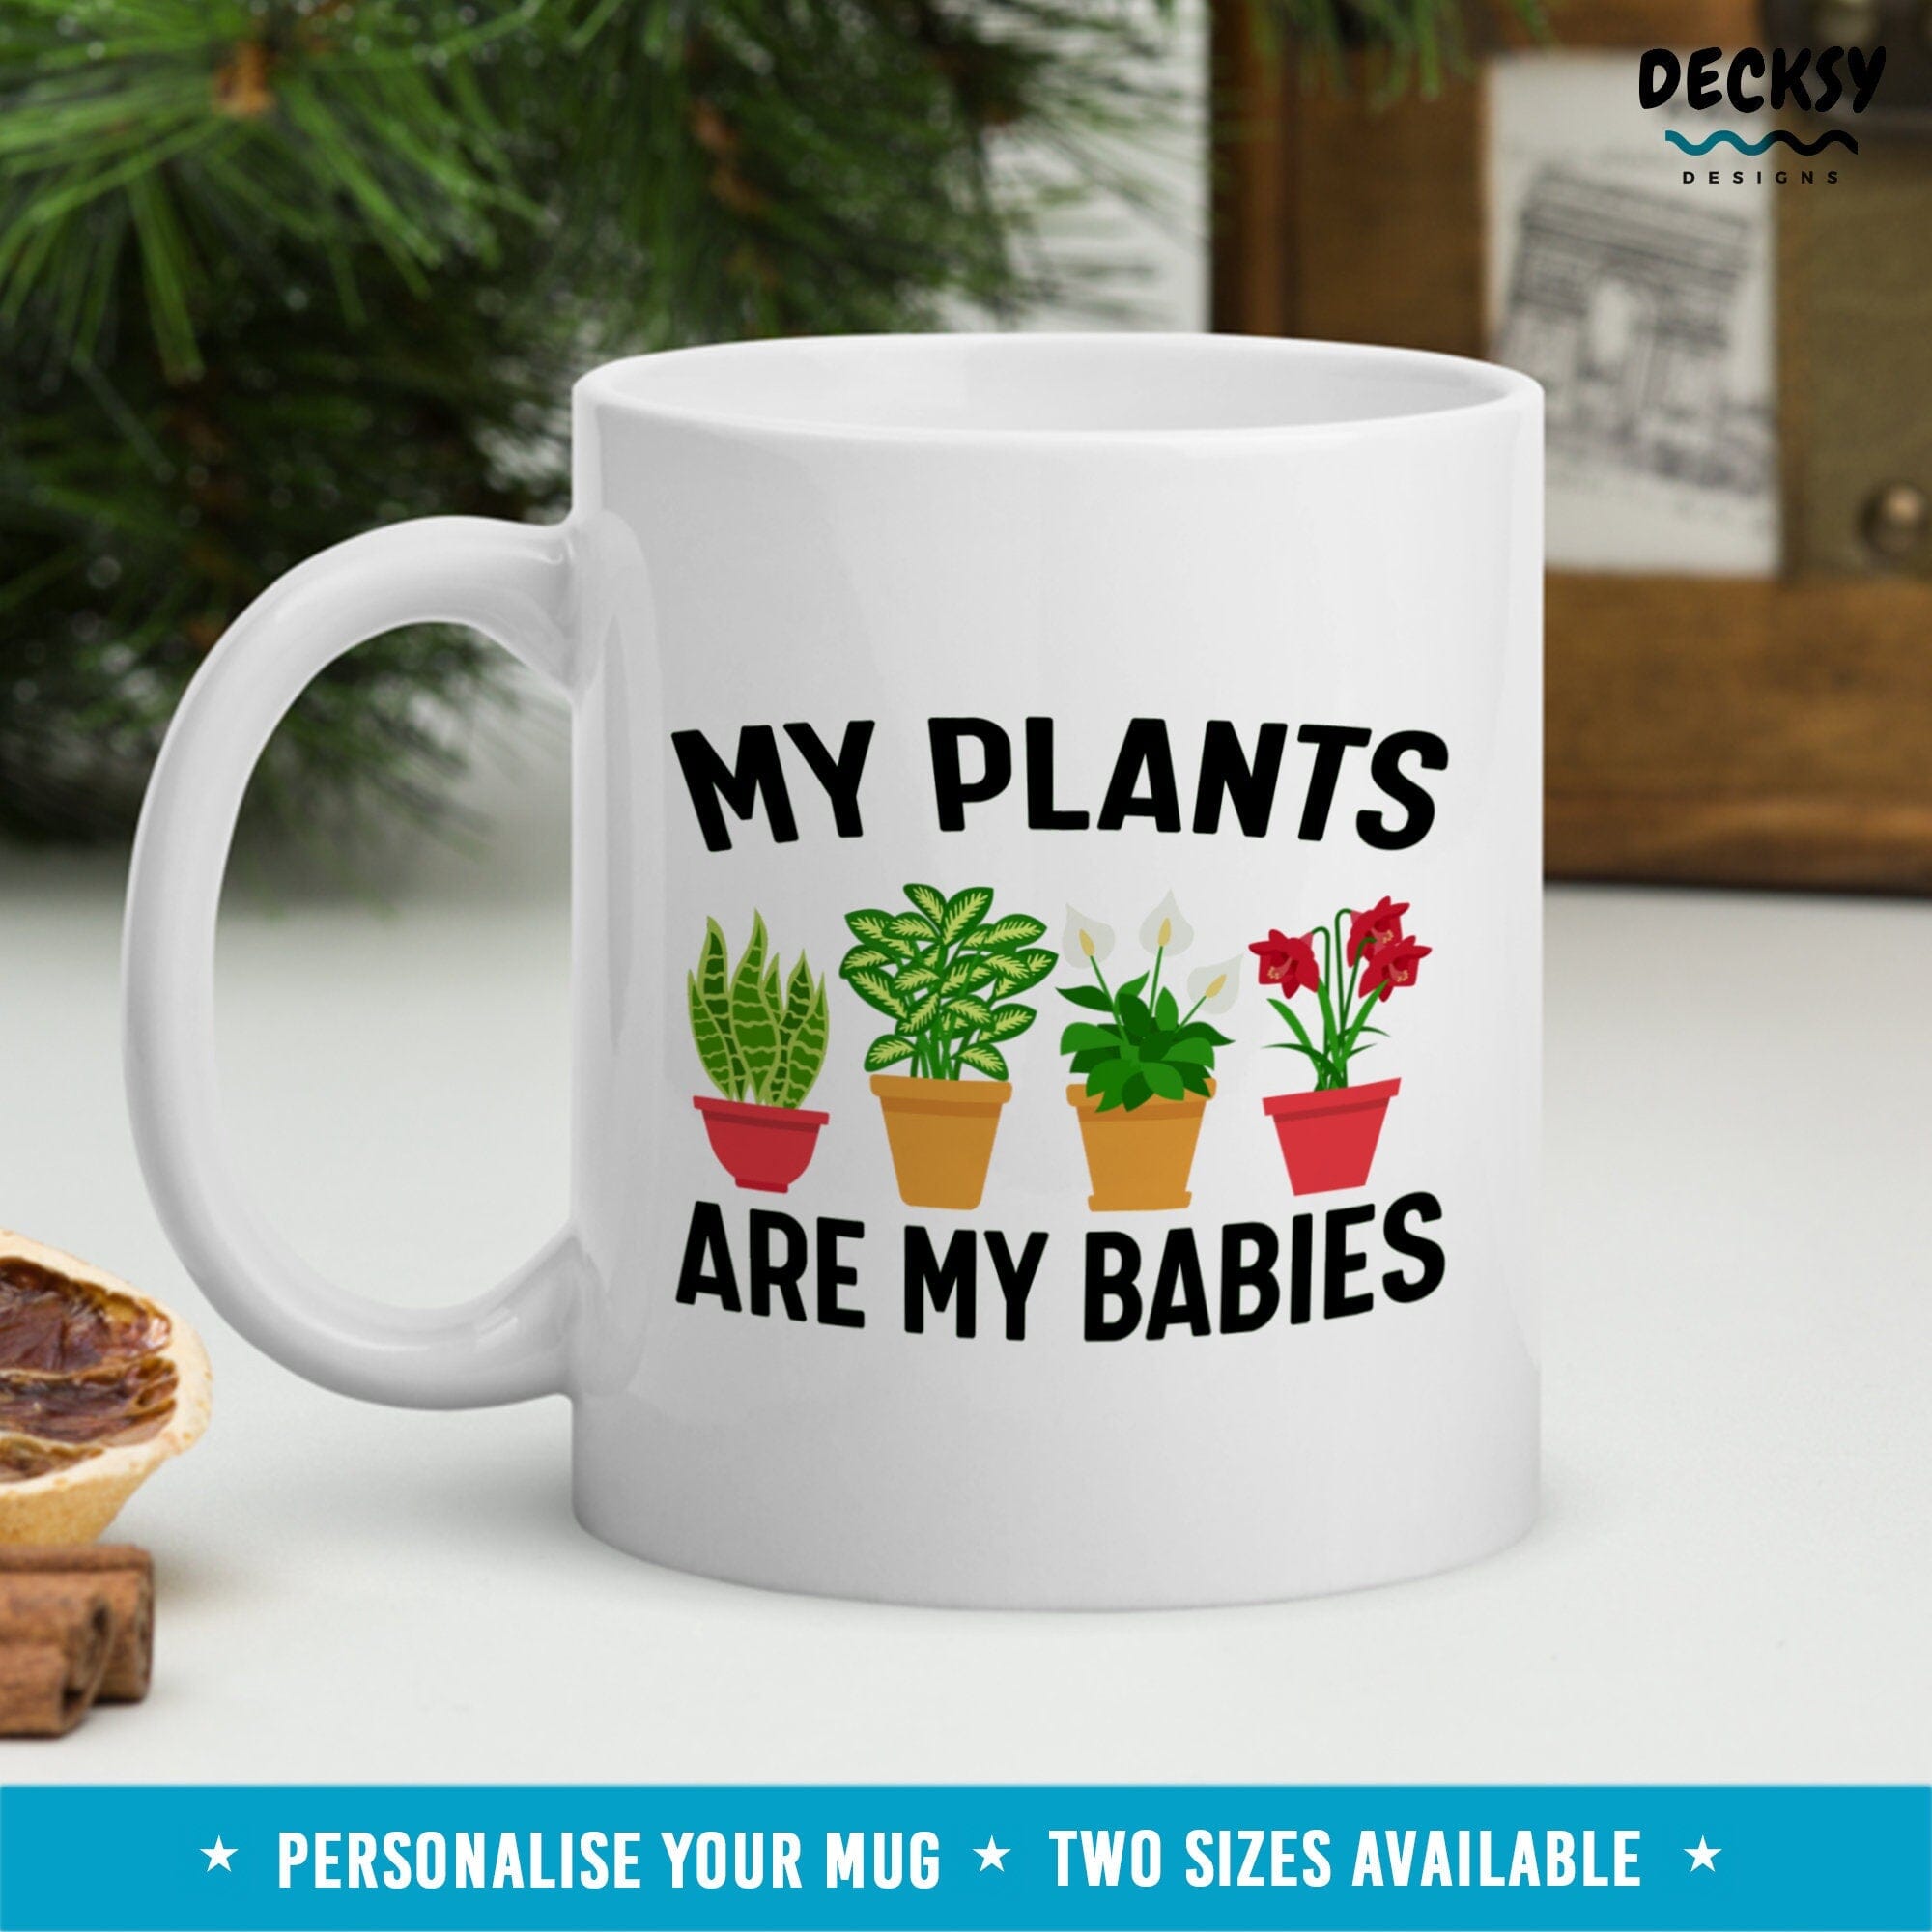 Plant Lover Gift, Gift for Gardener Home & Living:Kitchen & Dining:Drink & Barware:Drinkware:Mugs DecksyDesigns 